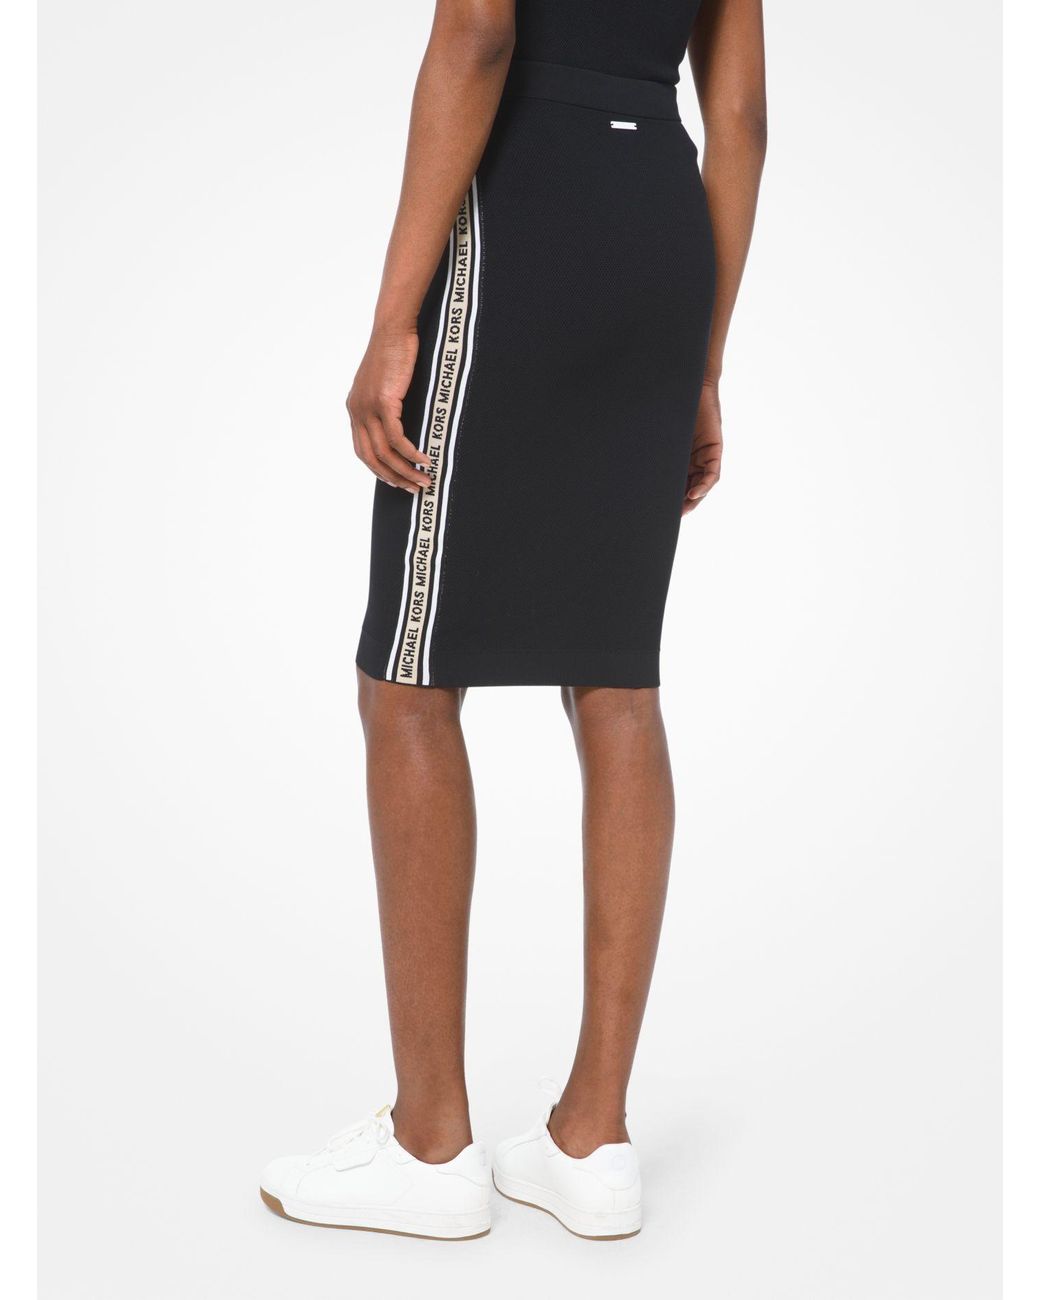 Michael Kors Logo Tape Textured Knit Pencil Skirt in Black | Lyst